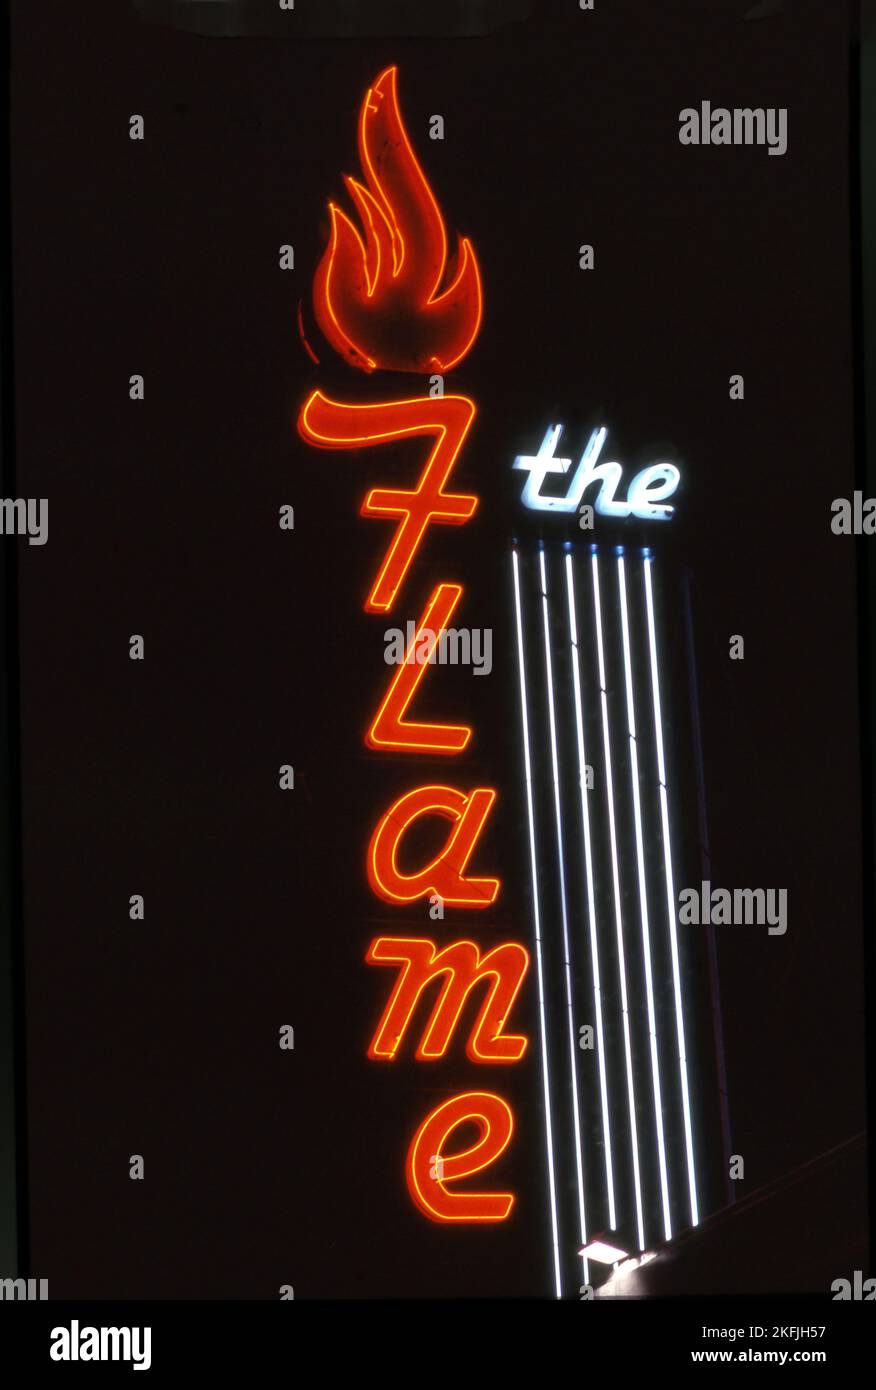 The Flame, neon sign, bar restaurant near San Diego, CA Stock Photo